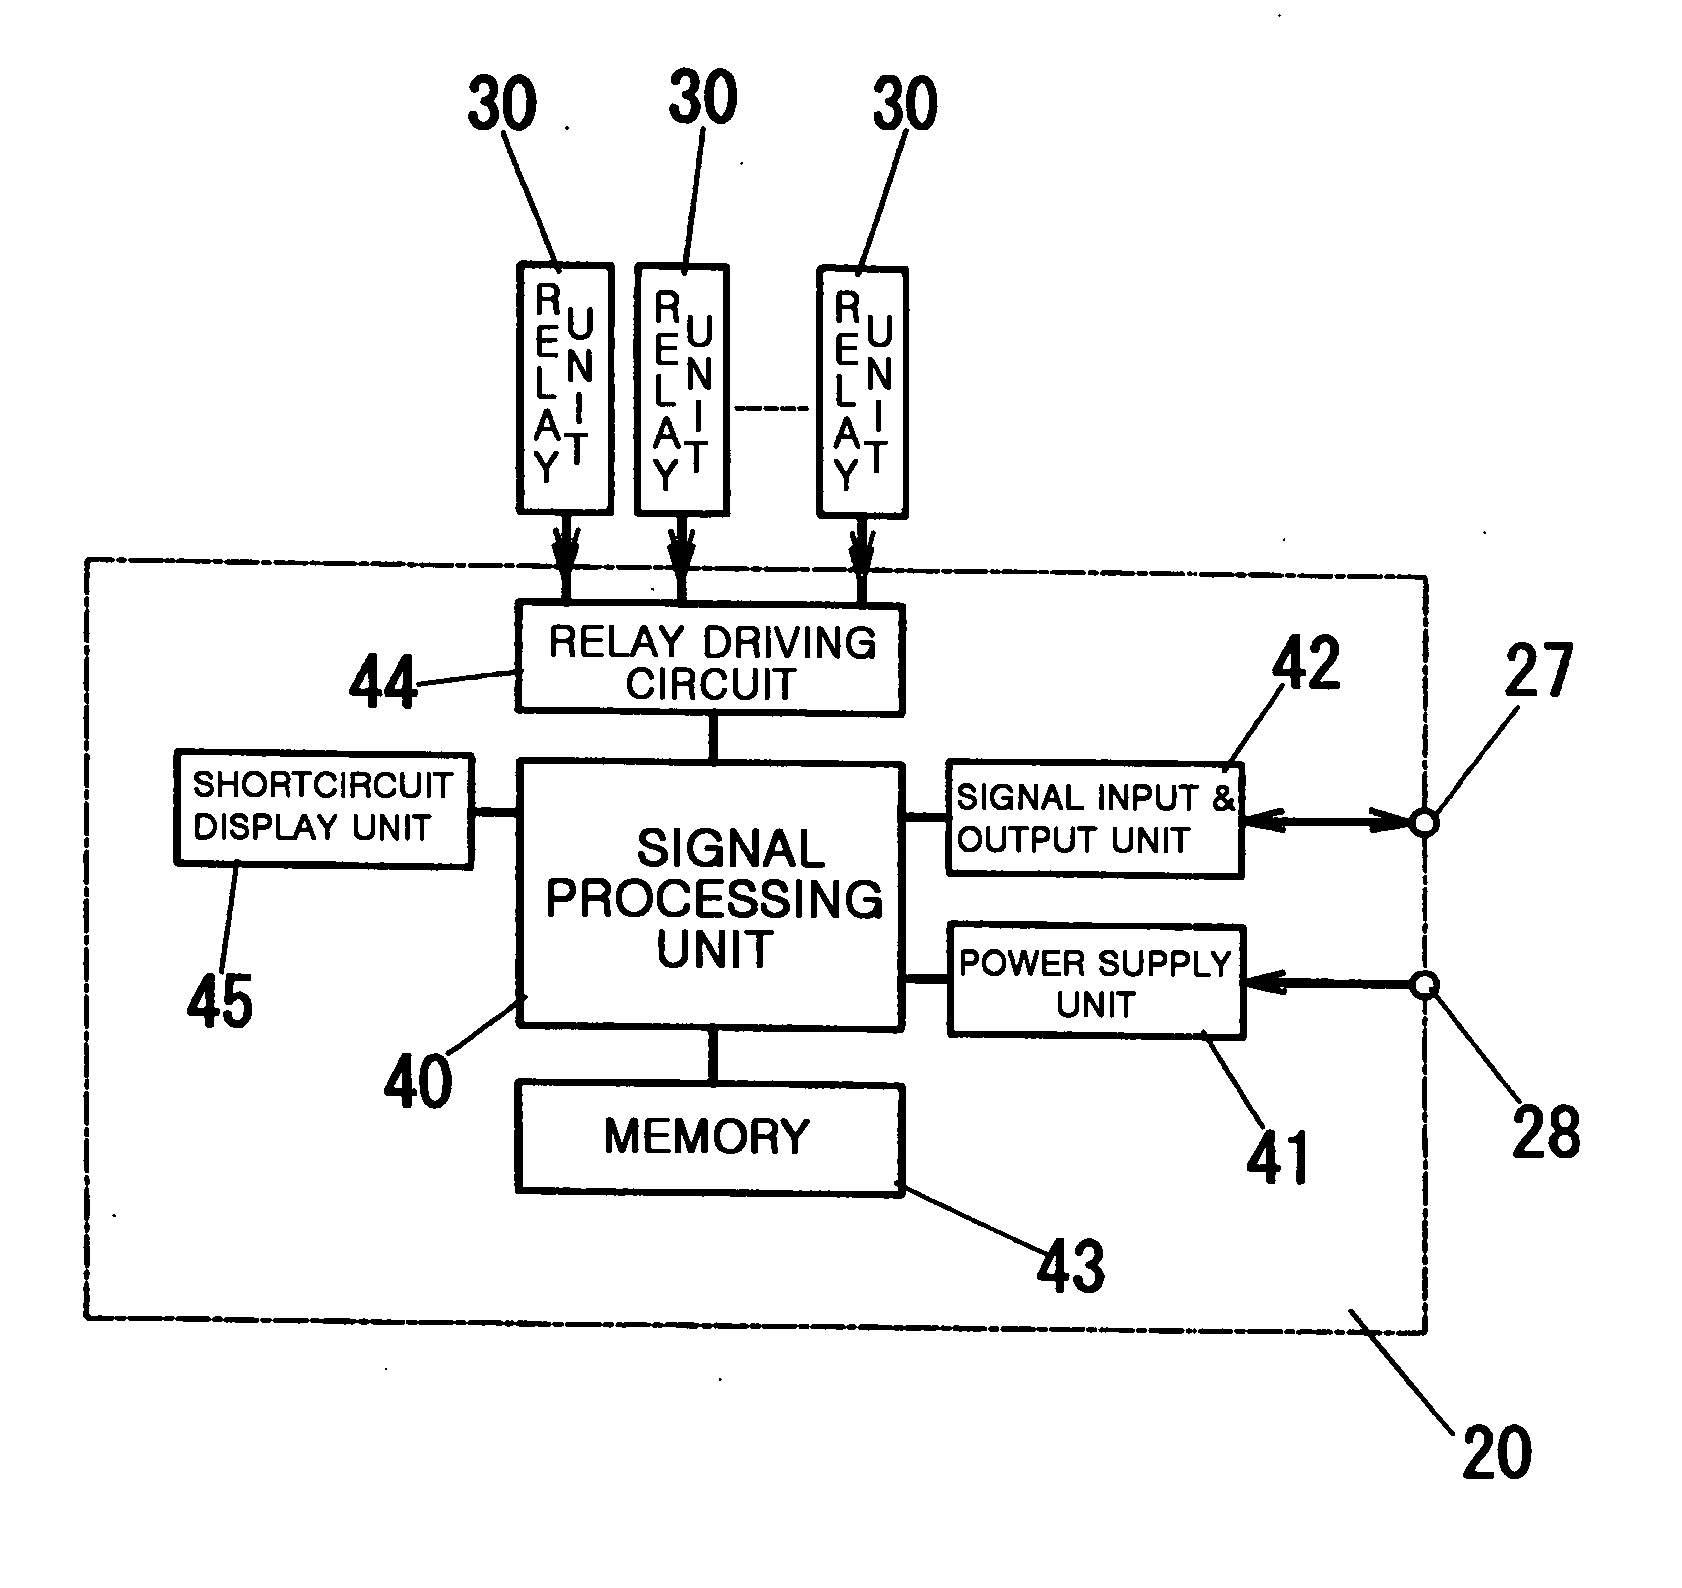 Remote control wiring mechanism